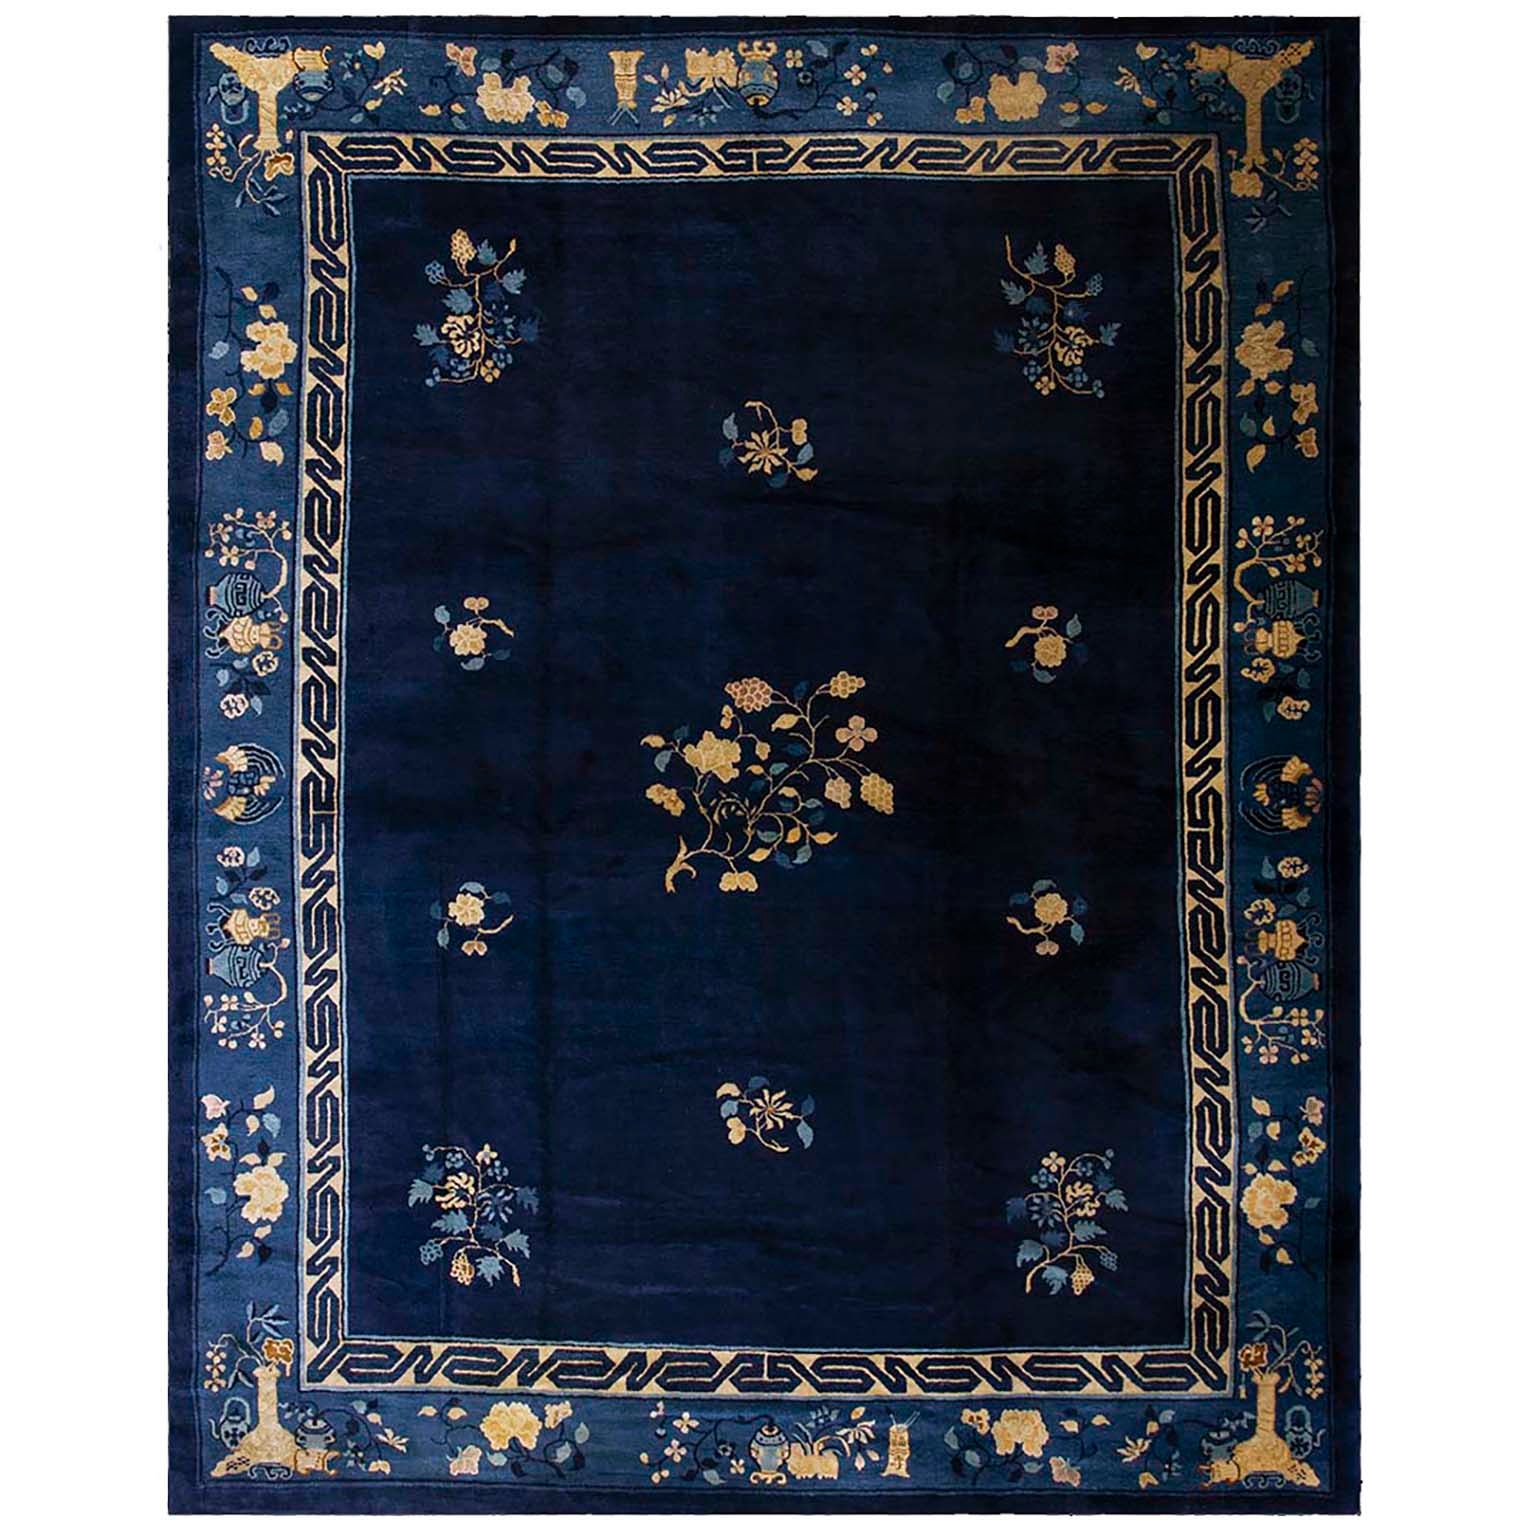 Early 20th Century Chinese Peking Carpet ( 9'3" x 11'9" - 282 x 358 )